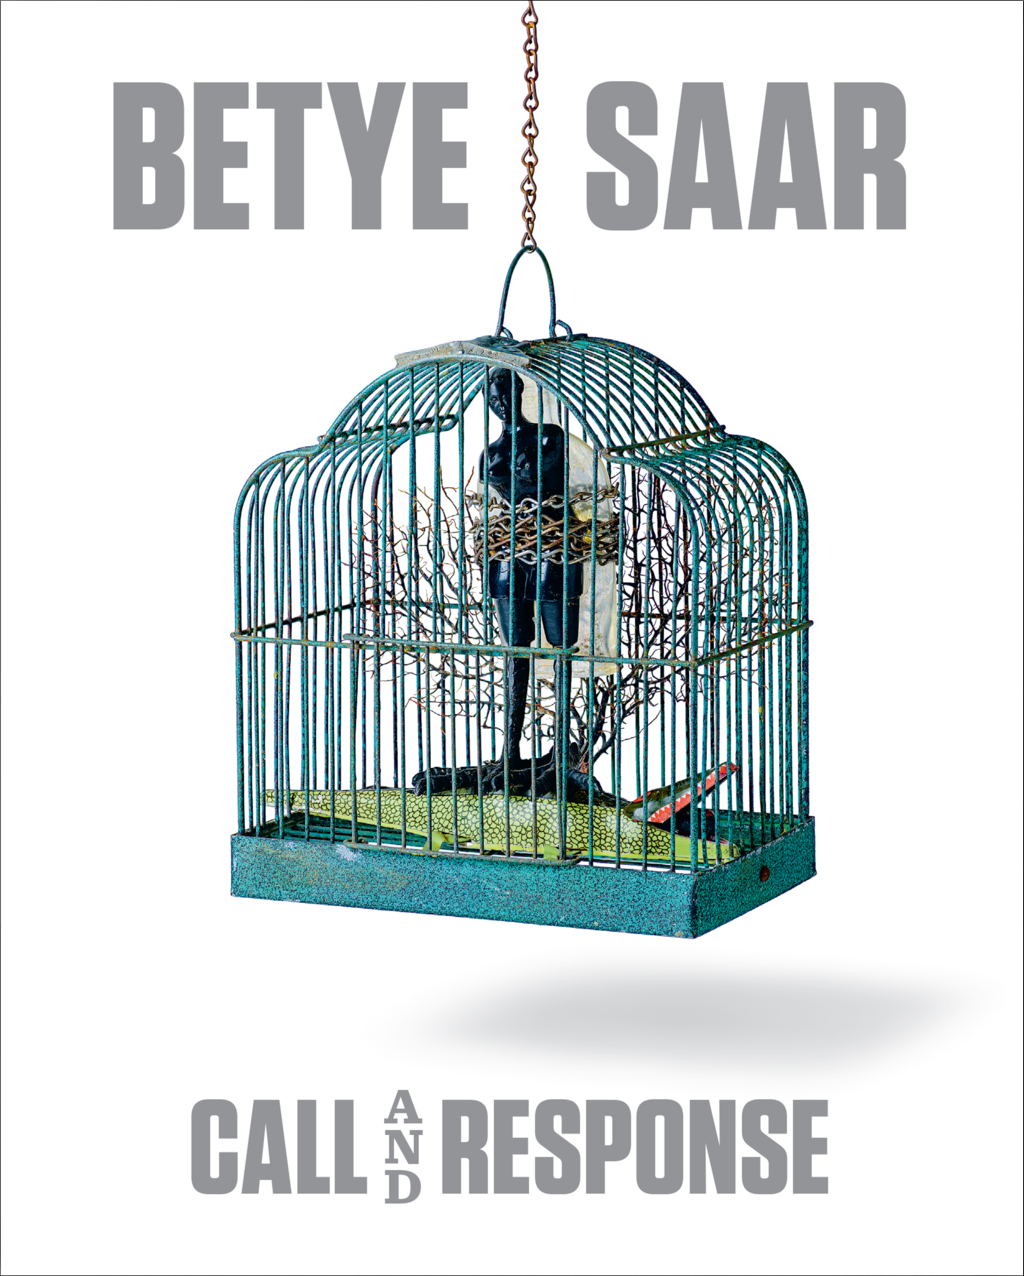 Betye Saar: Call and Response exhibition catalogue